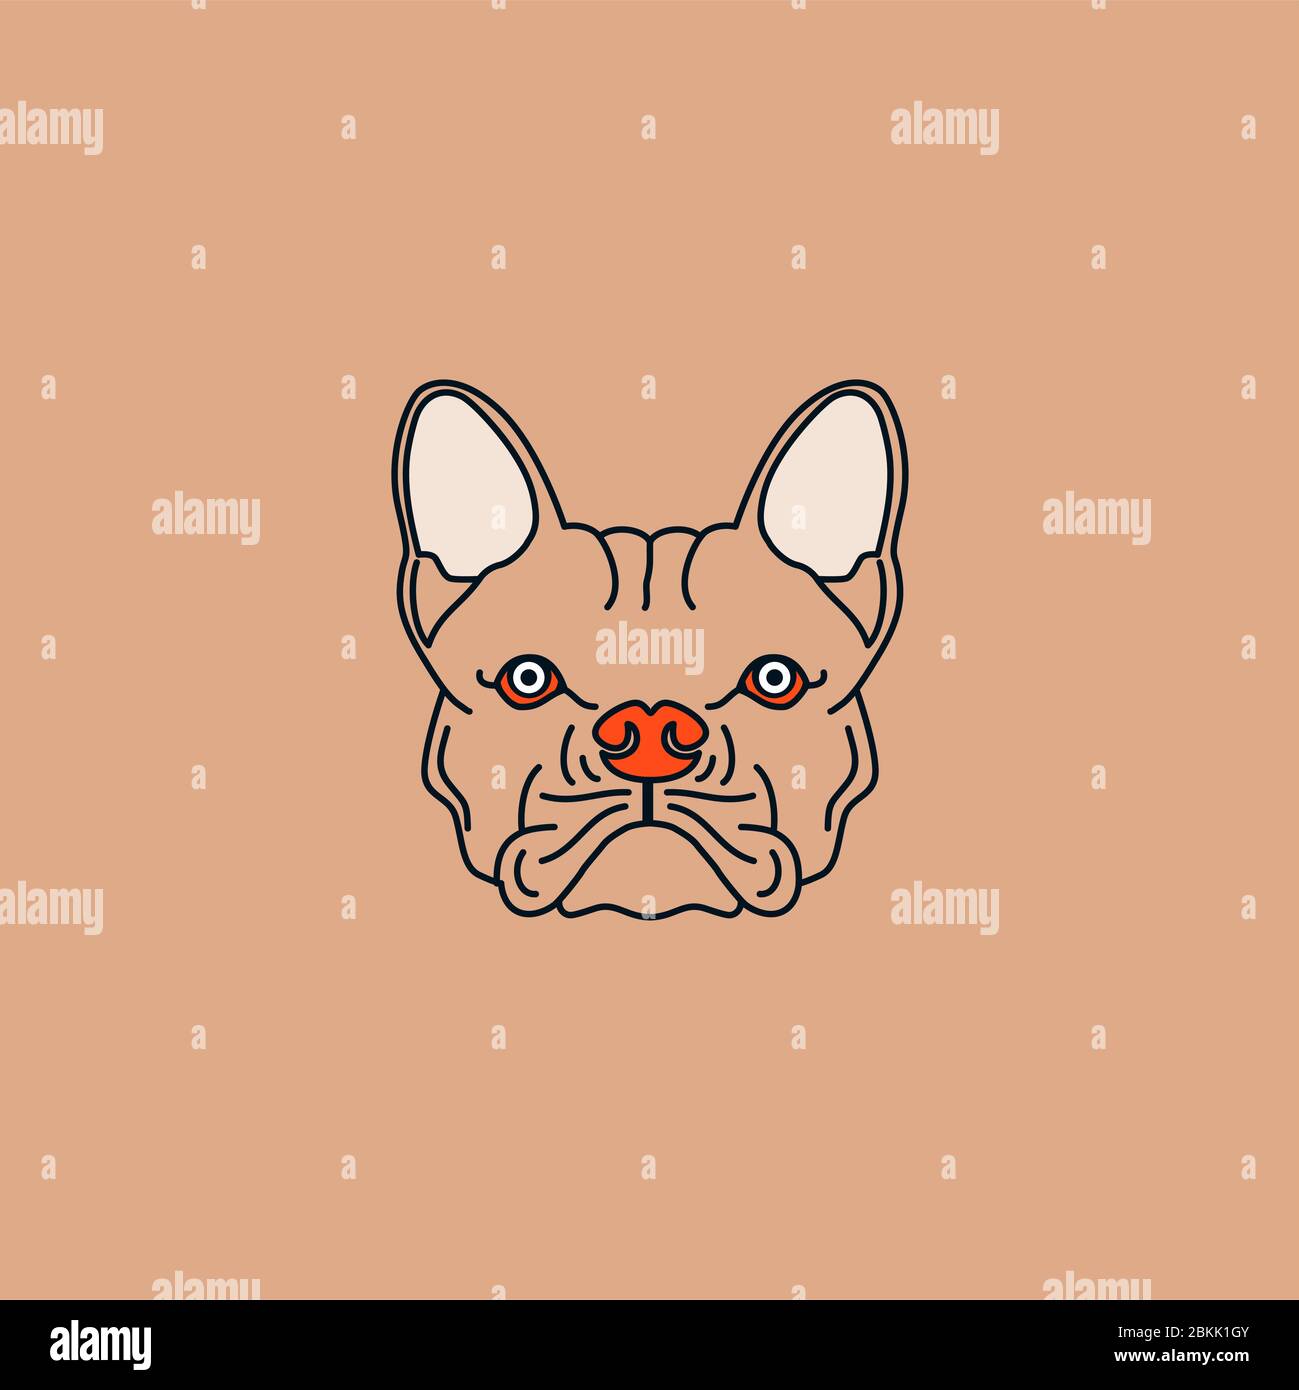 Cute cartoon dog head logo design Stock Vector